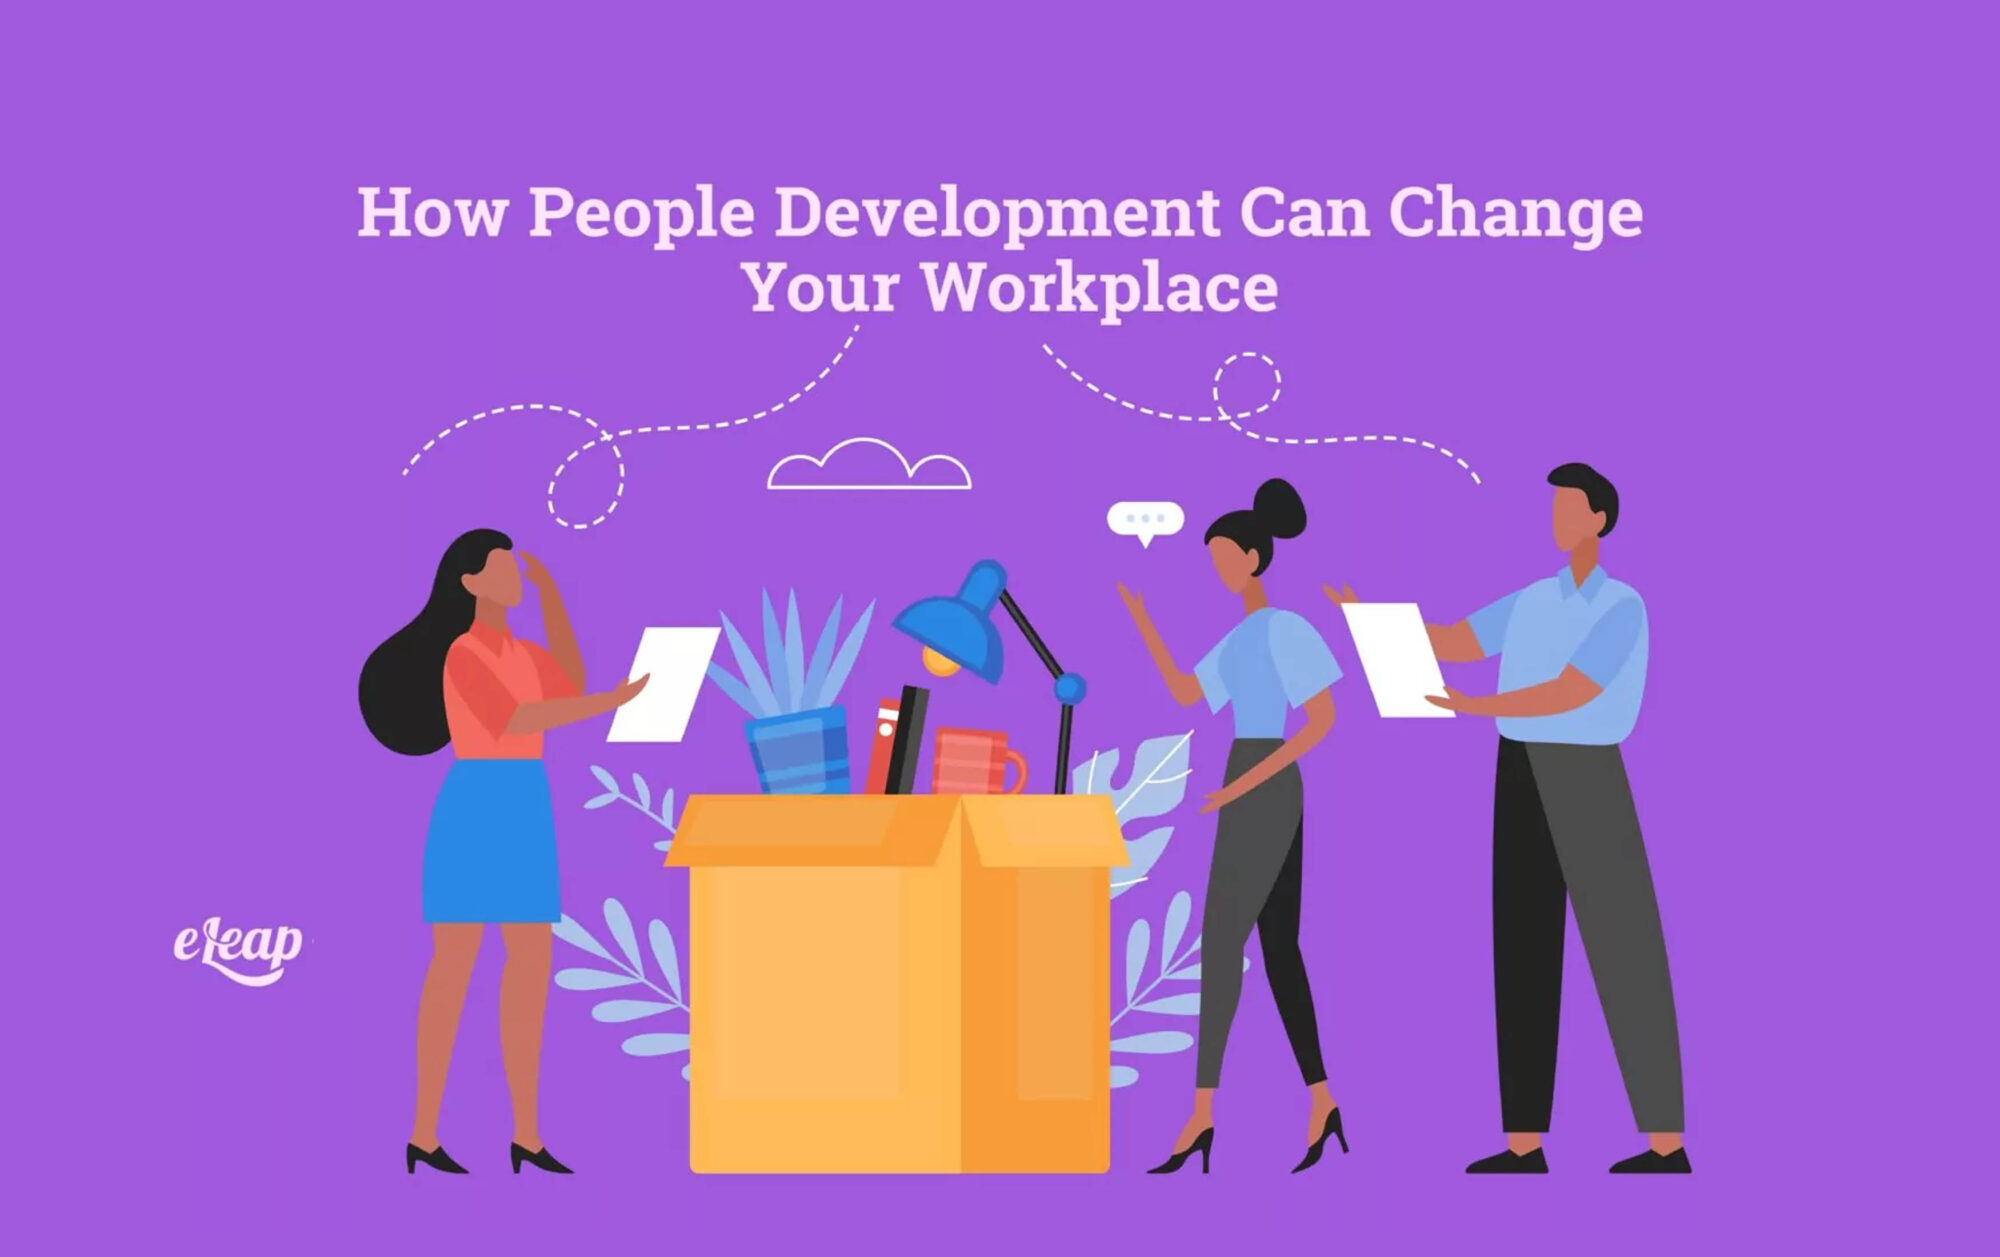 People Development